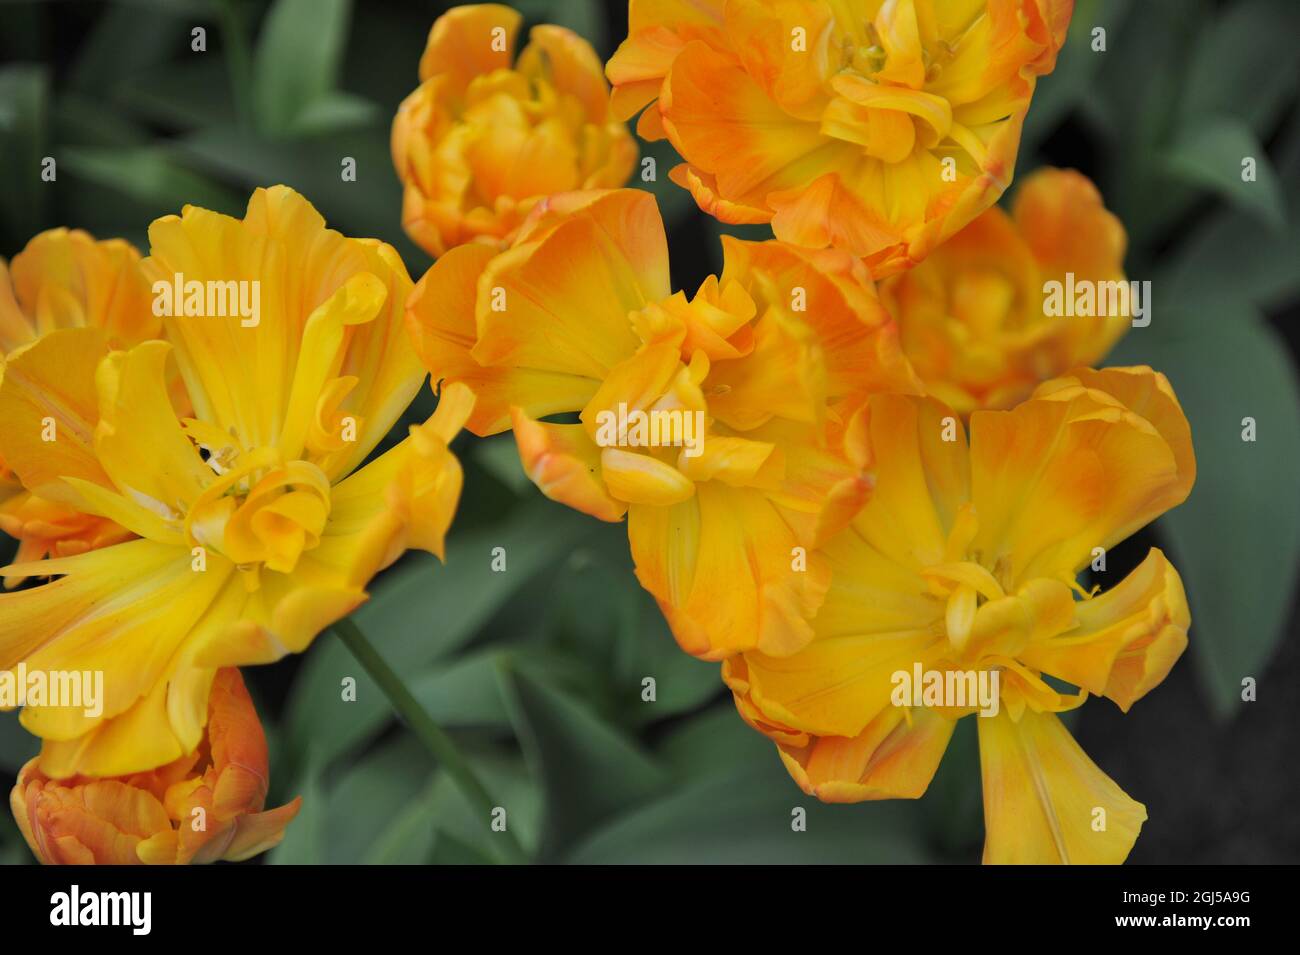 Orange-yellow Double Late tulips (Tulipa) Granny Award bloom in a garden in April Stock Photo